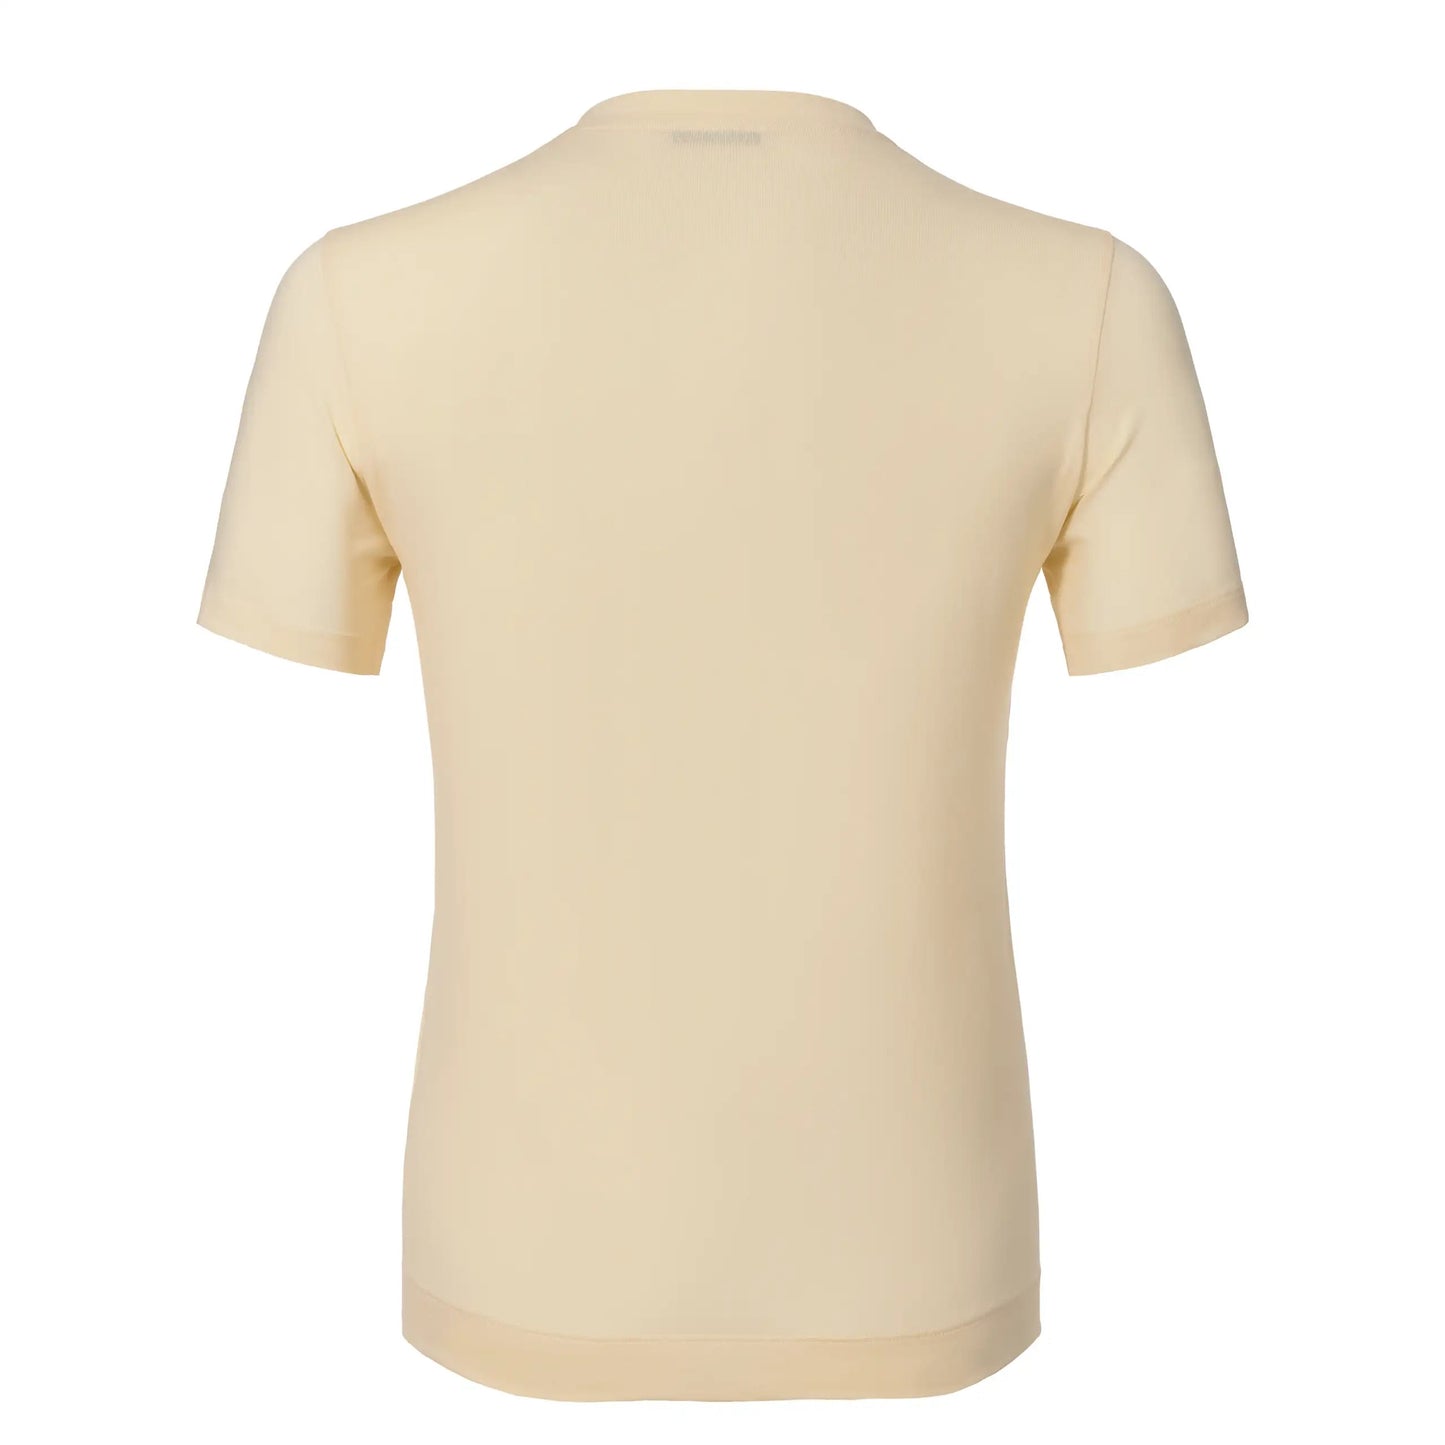 Cruciani Stretch - Cotton T - Shirt in Bourbon Vanille - SARTALE